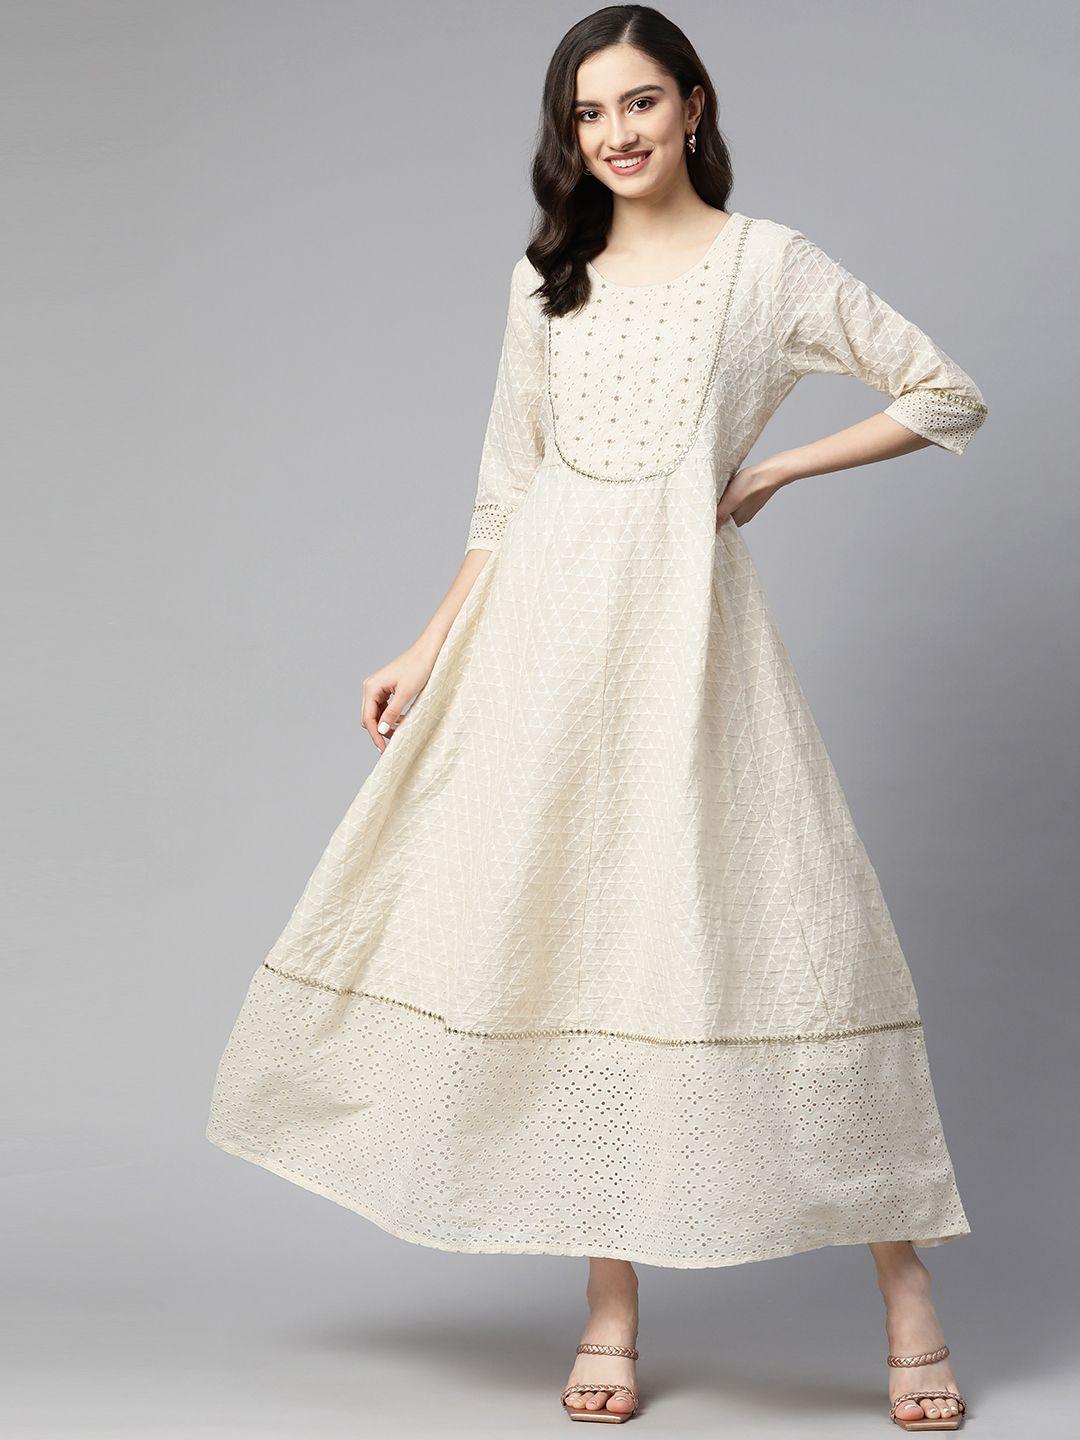 readiprint fashions cream-coloured floral embroidered maxi dress